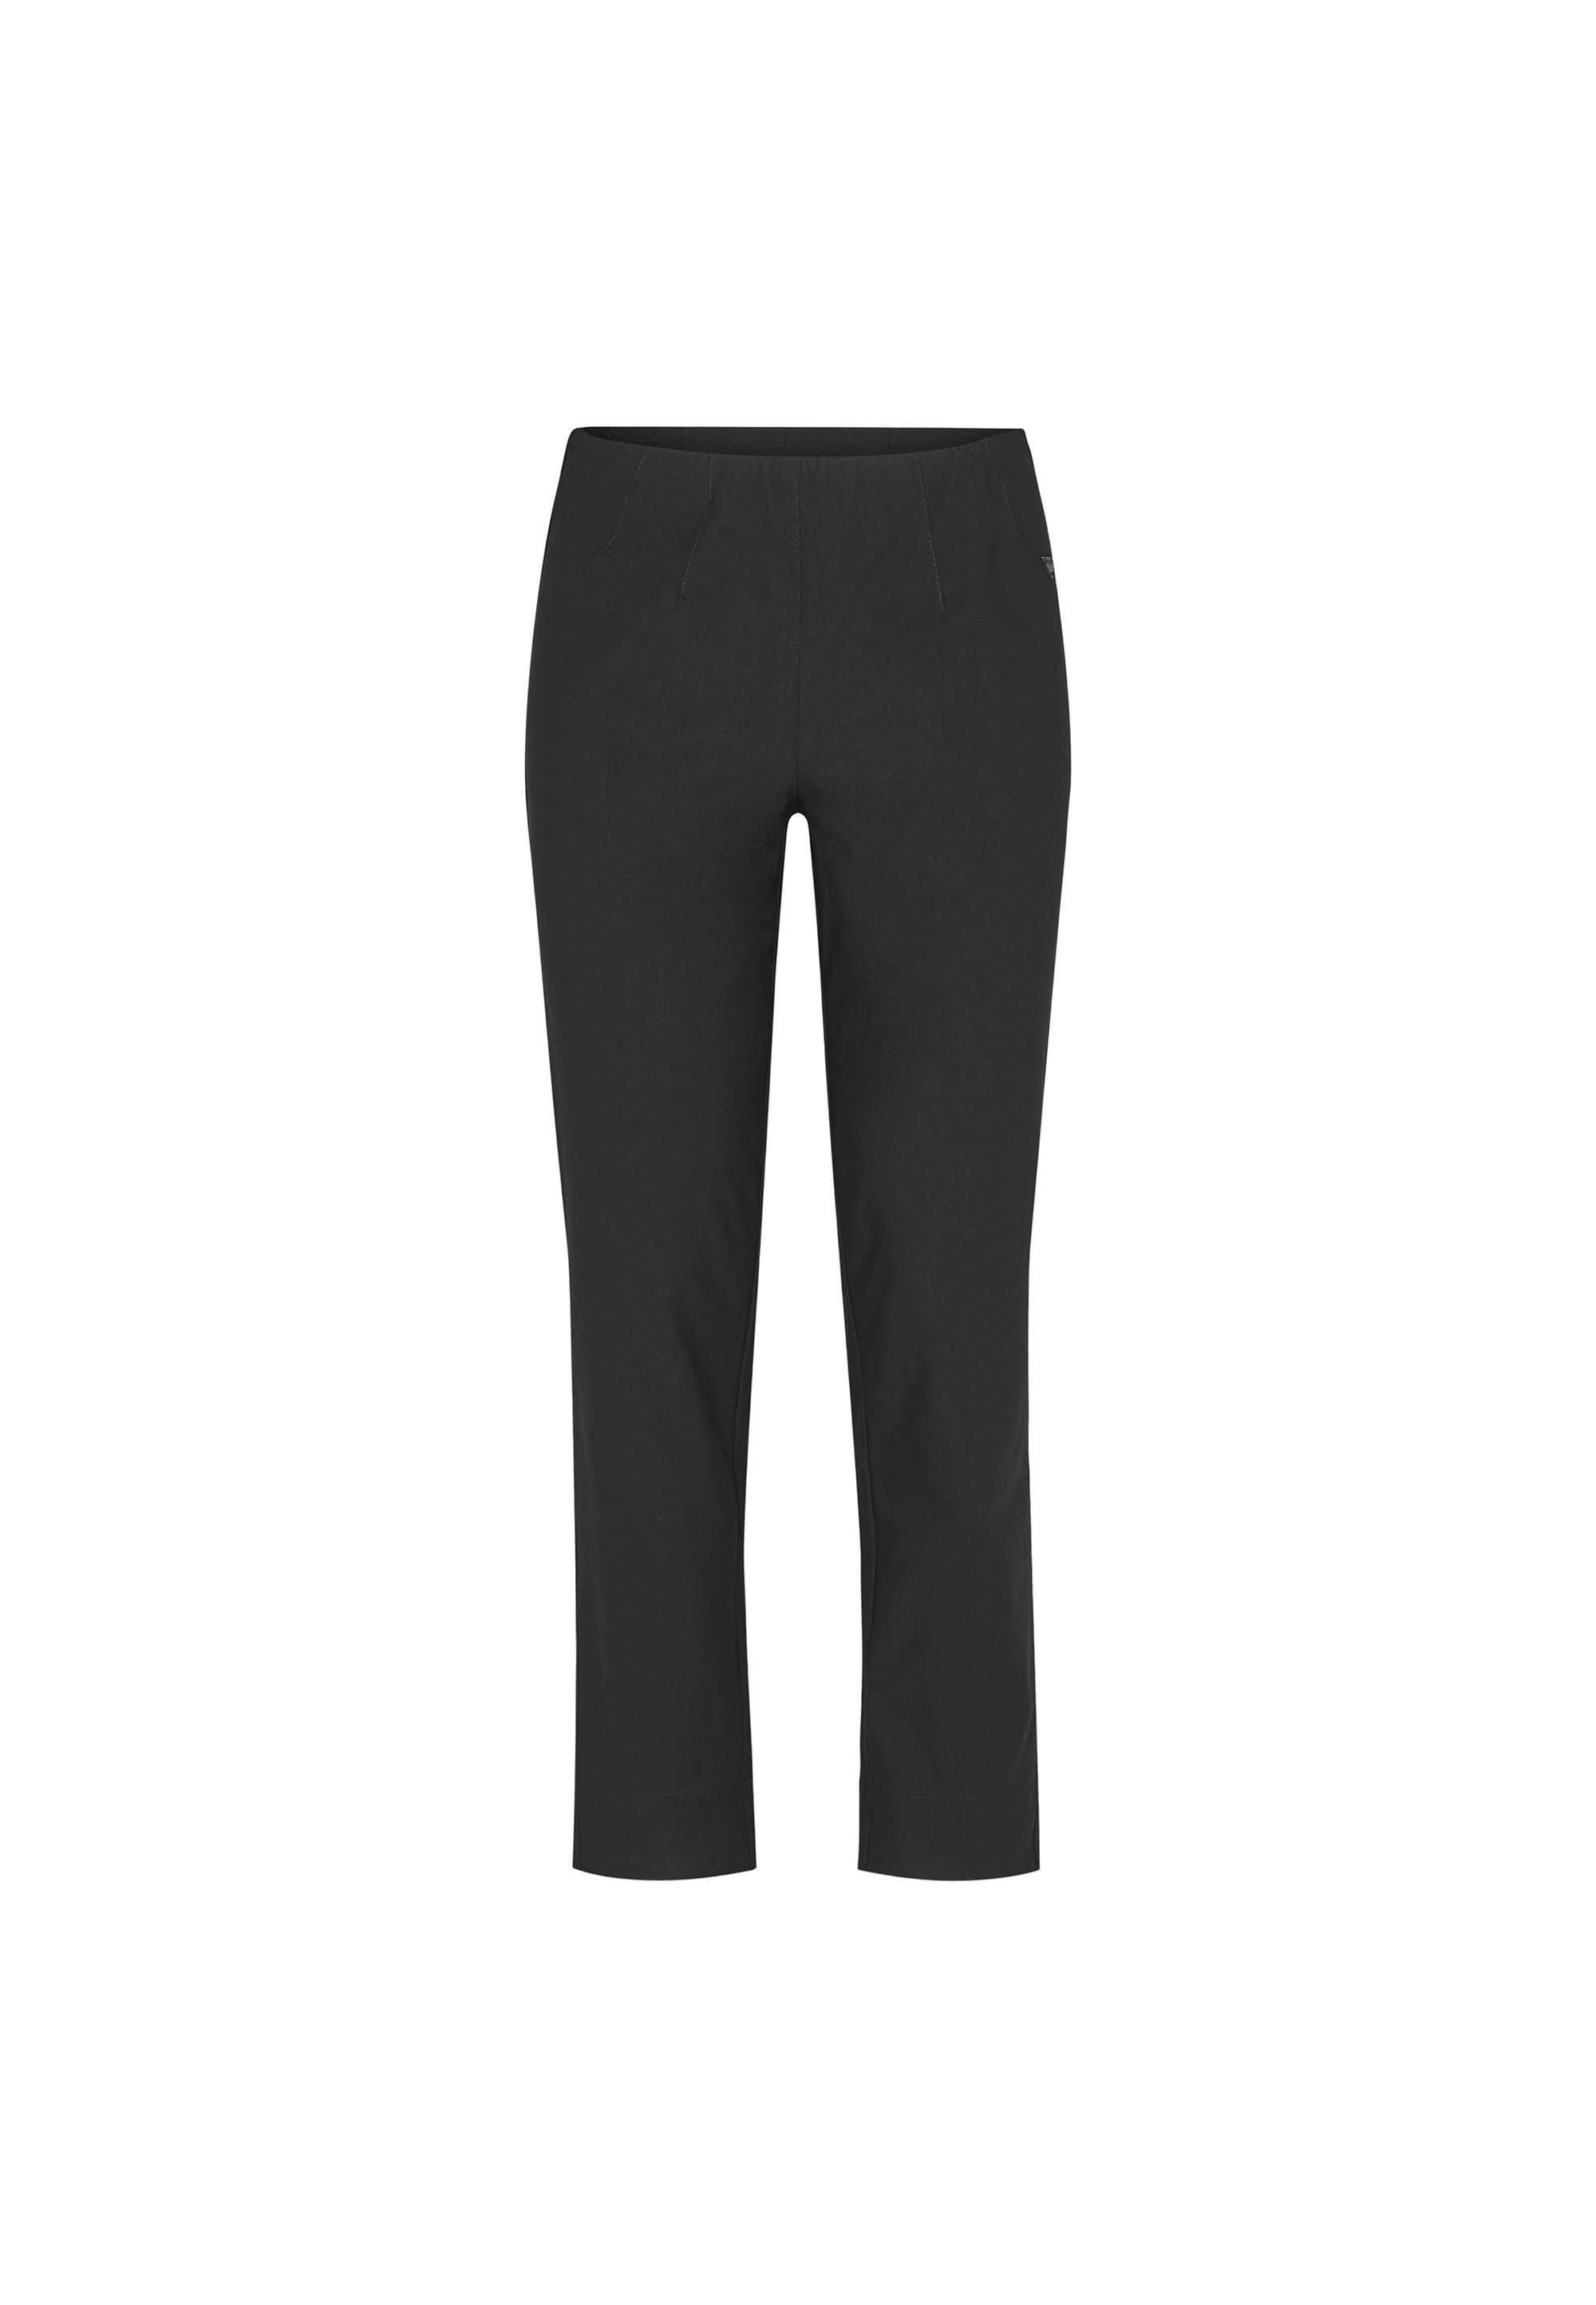 LAURIE Betty Regular - Medium Length Trousers REGULAR 99970 Black